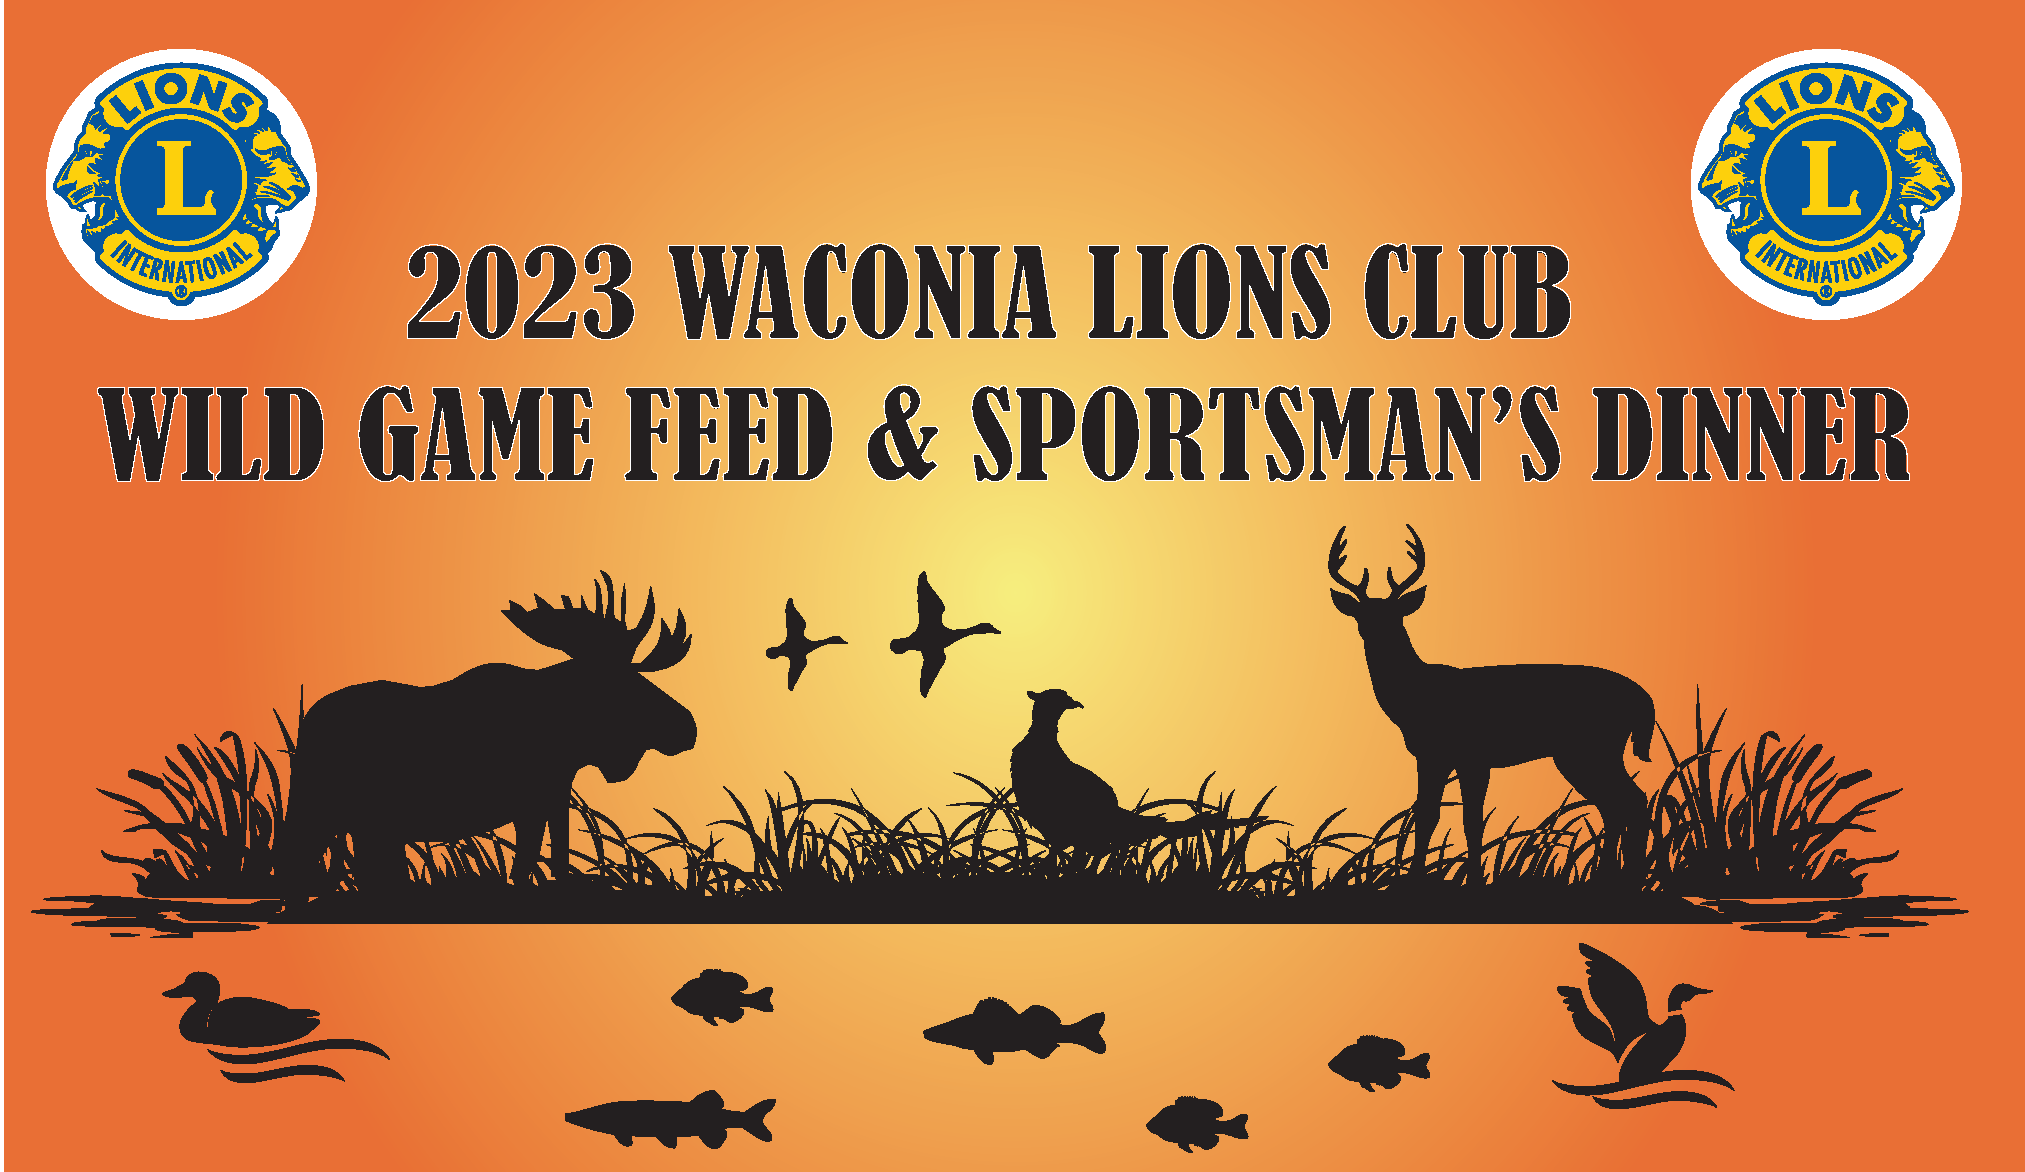 Wild Game Feed & Sportsman Dinner Waconia Lions Club